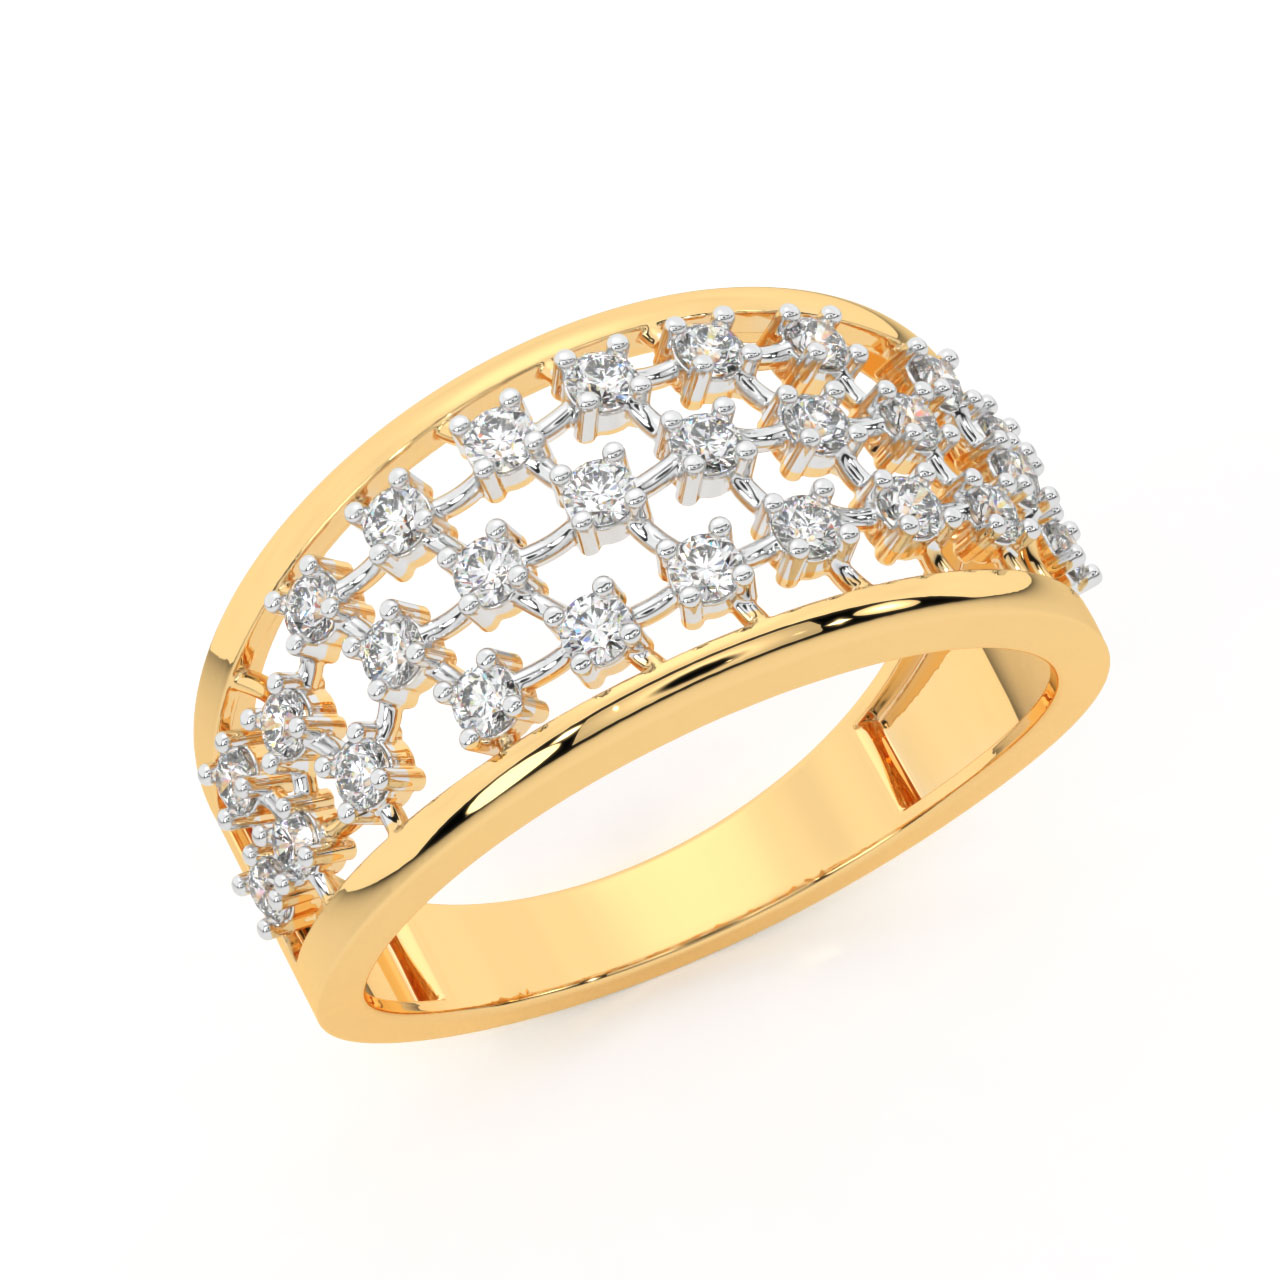 Gaynor Round Diamond Engagement Ring